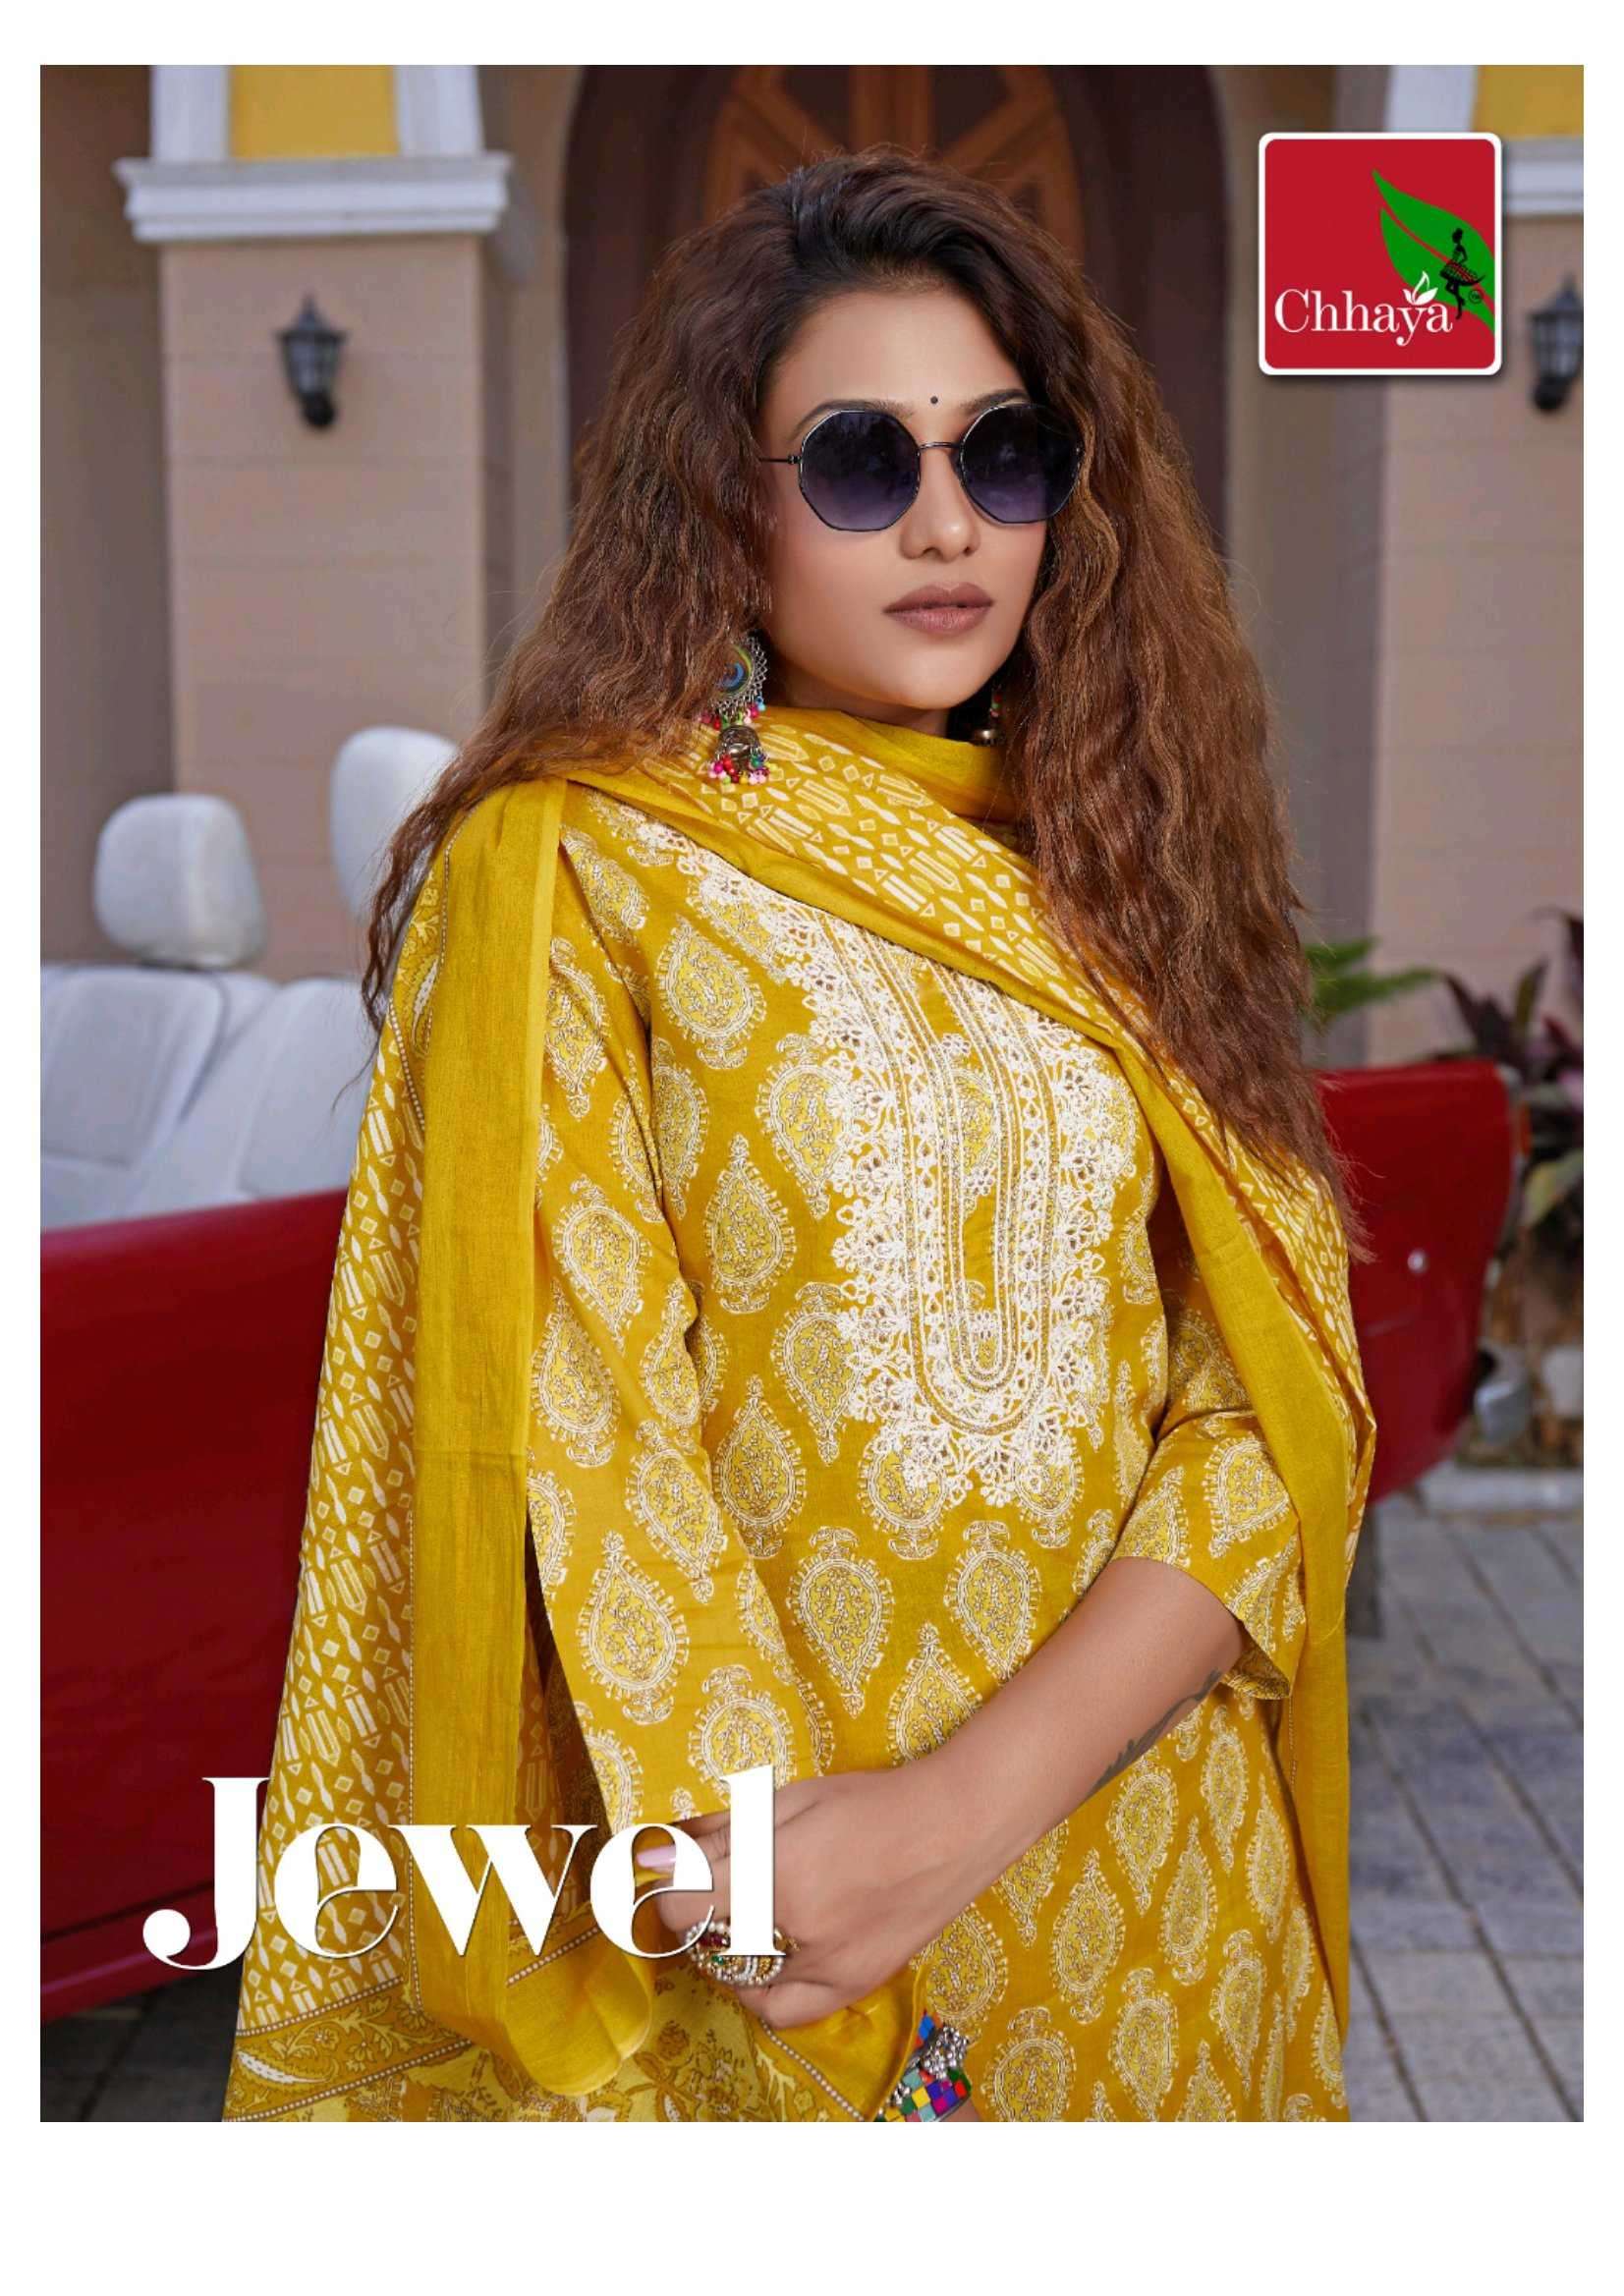 chhaya jewel series 1001-1005 Heavy 60*60 jaipuri cotton print readymade suit 